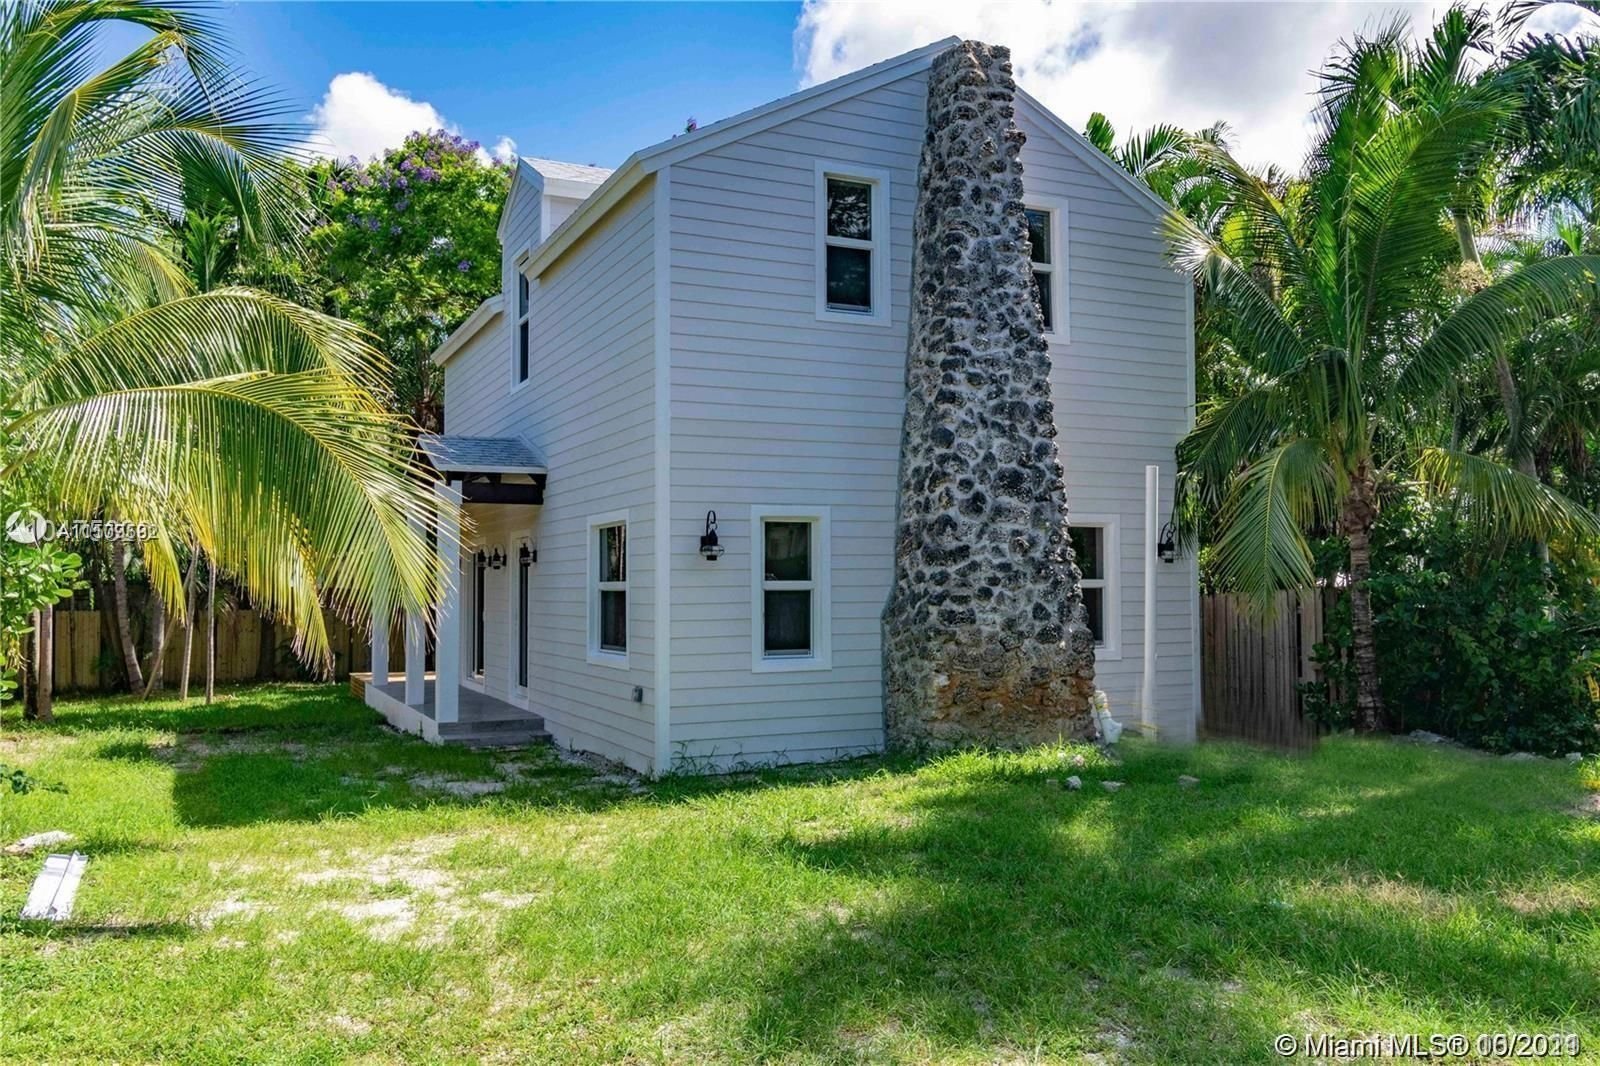 Real estate property located at 660 68th St, Miami-Dade County, Miami, FL